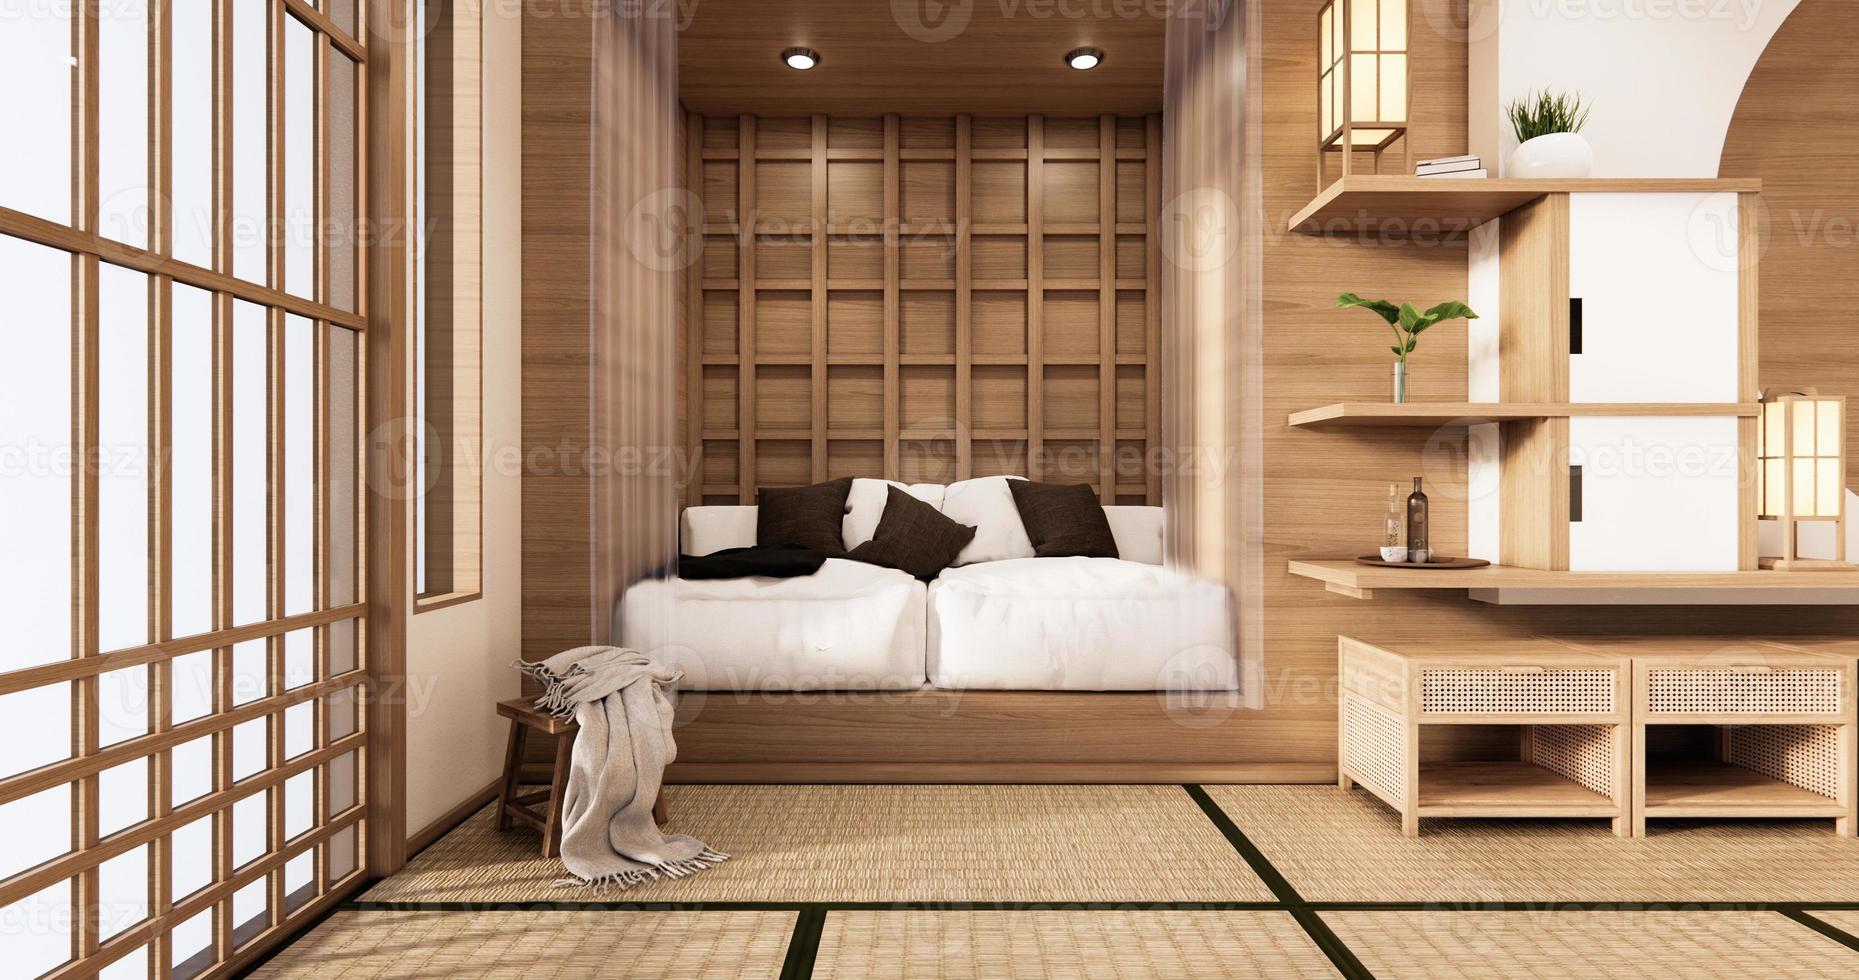 White Sofa japanese on room japan tropical desing and tatami mat floor.3D rendering photo